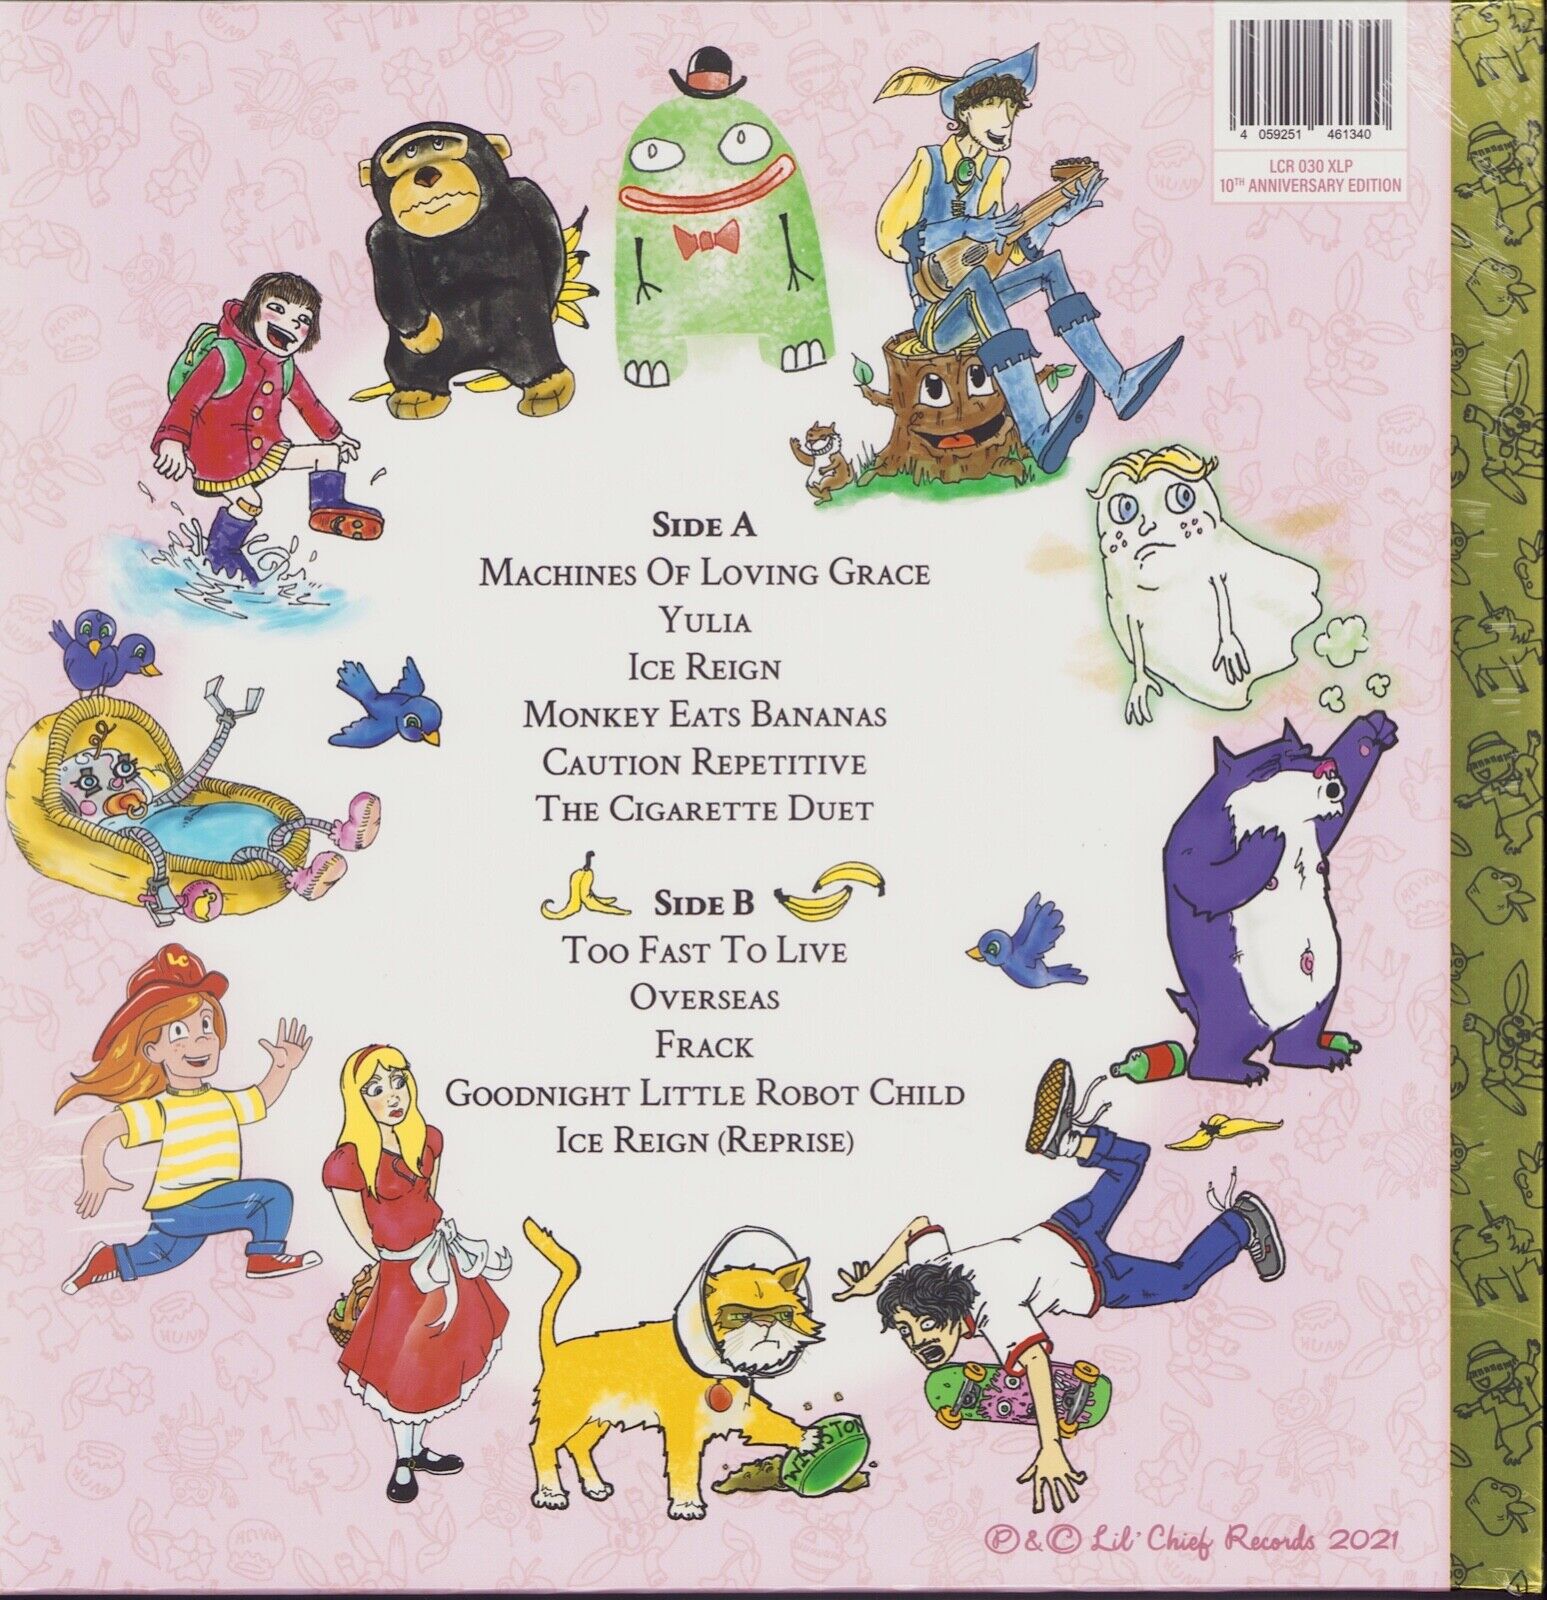 Princess Chelsea - Lil' Golden Book Gold Vinyl LP 10th Anniversary Edition